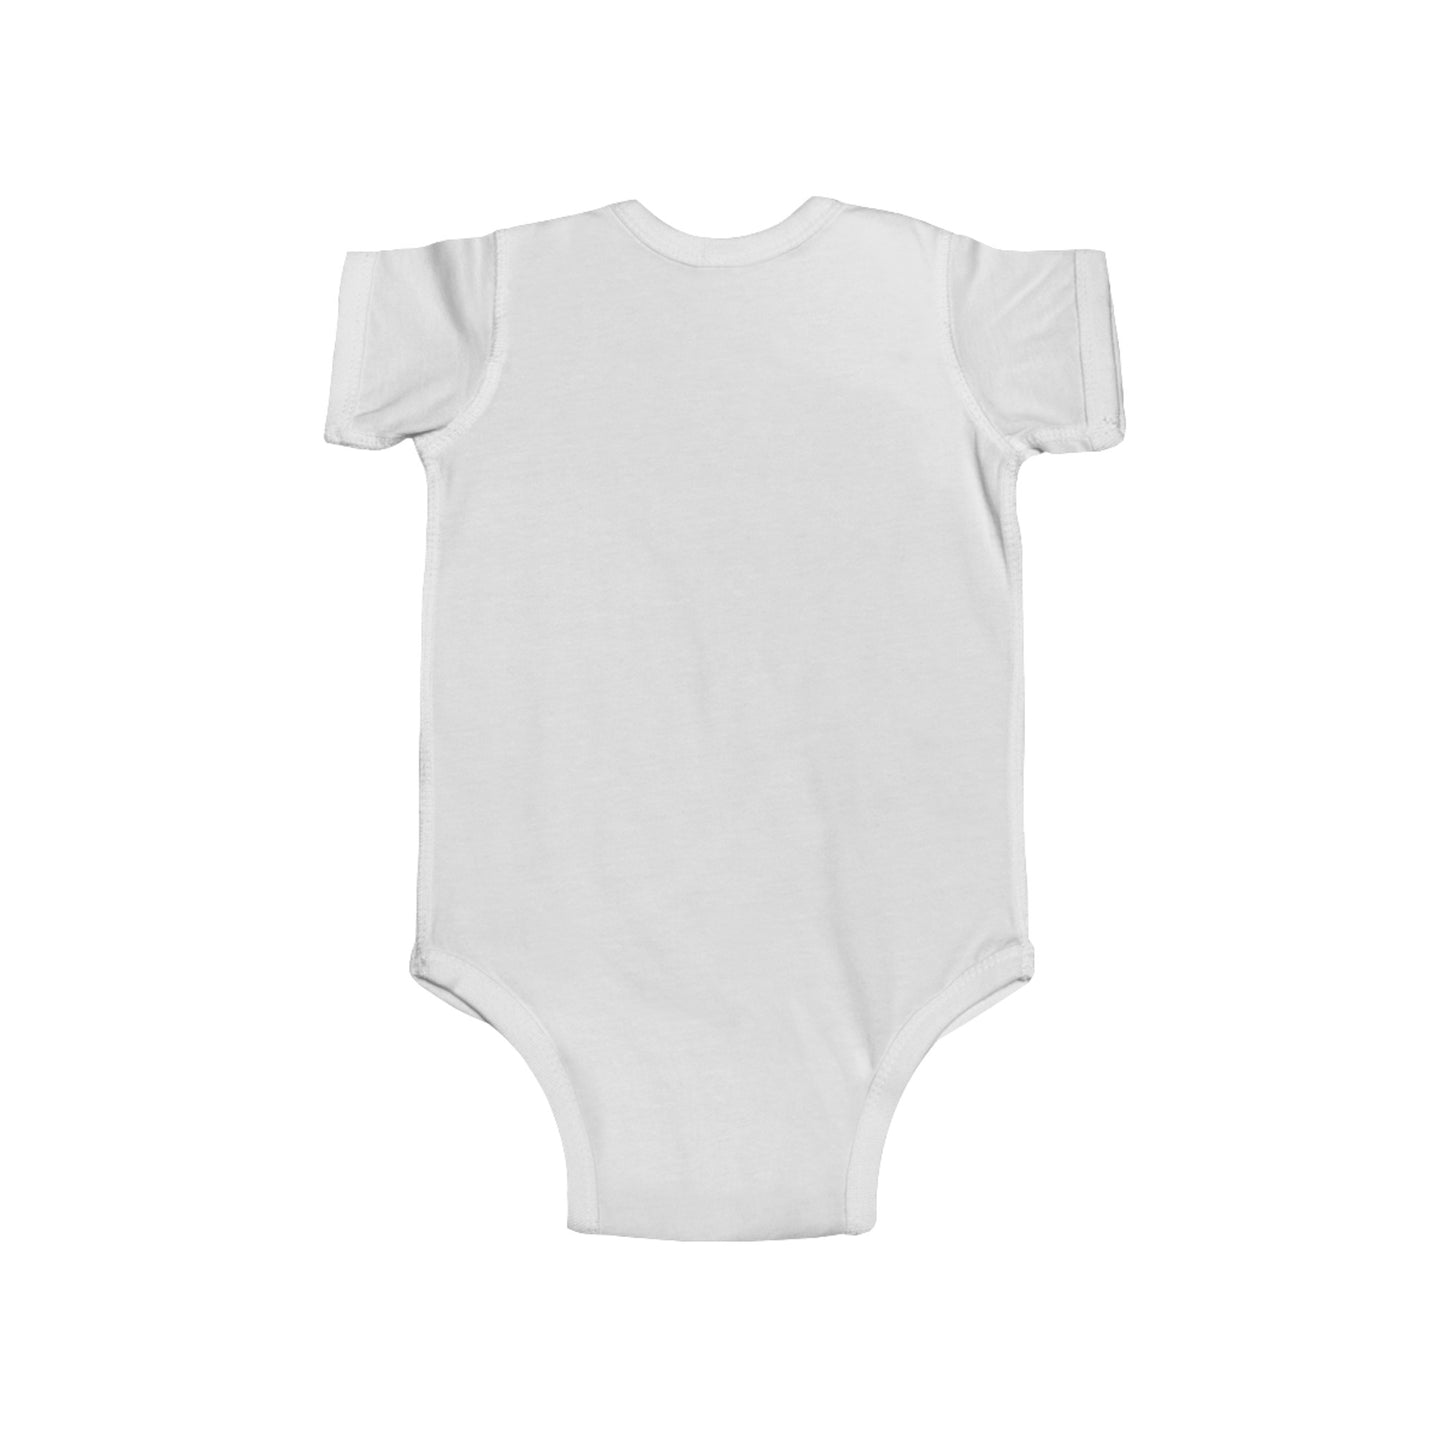 Santa Maria Te Amo-  Unisex Infant Jersey Bodysuit